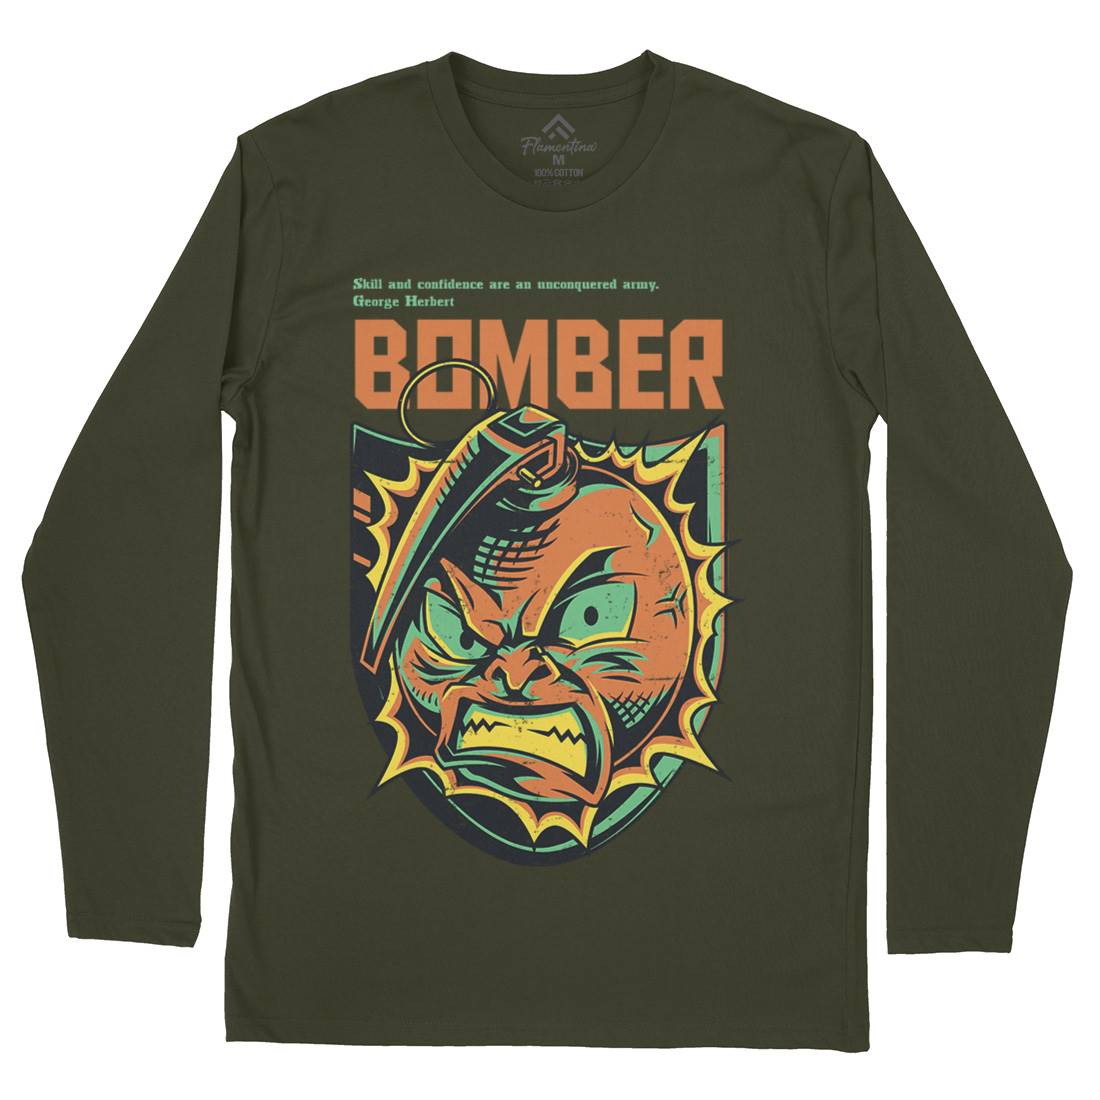 Bomber Grenade Mens Long Sleeve T-Shirt Army D846